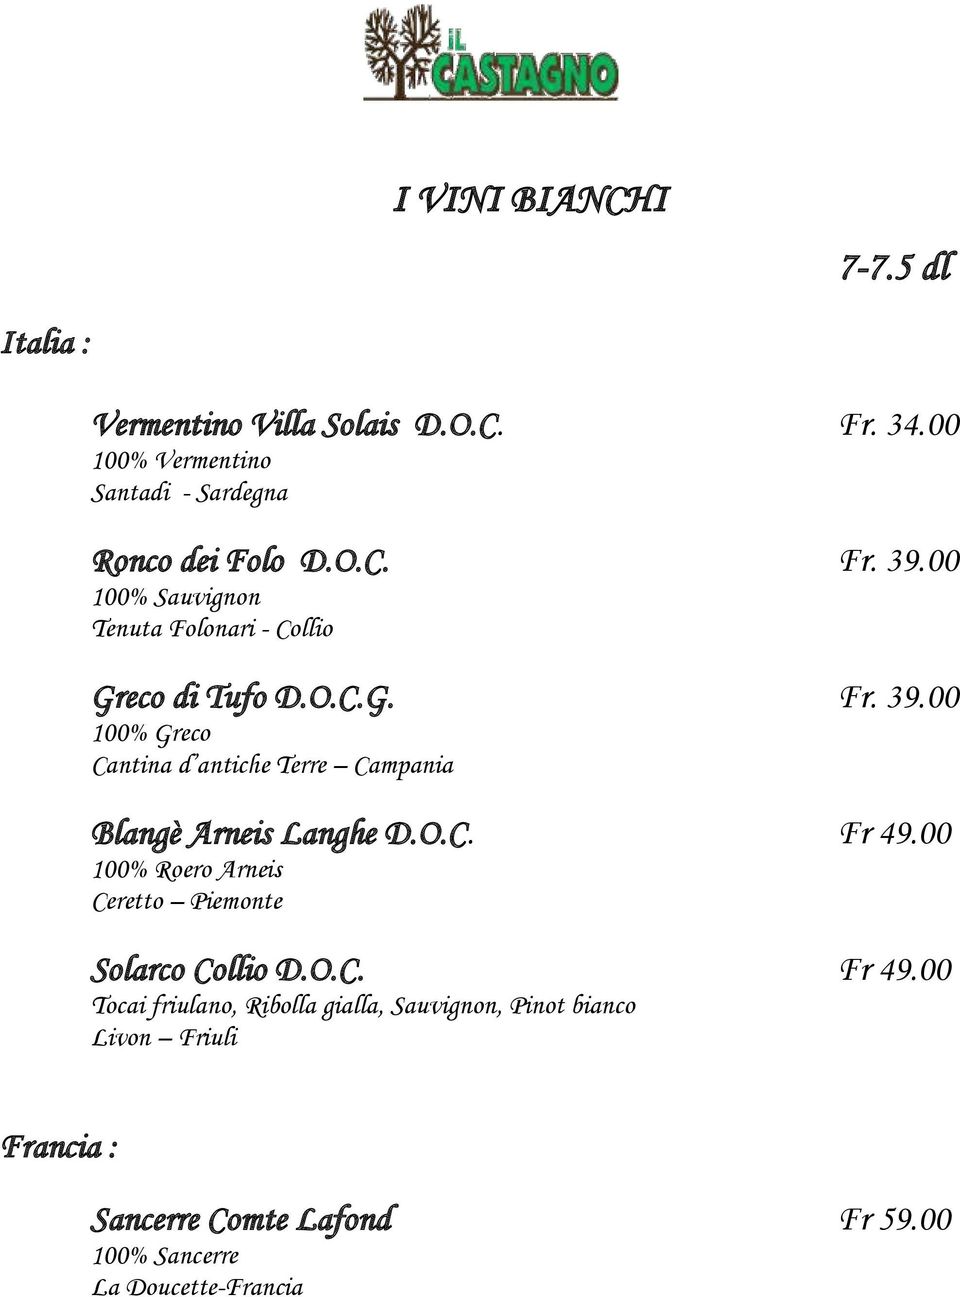 O.C. Fr 49.00 100% Roero Arneis Ceretto Piemonte Solarco Collio D.O.C. Fr 49.00 Tocai friulano, Ribolla gialla, Sauvignon, Pinot bianco Livon Friuli Francia : Sancerre Comte Lafond Fr 59.